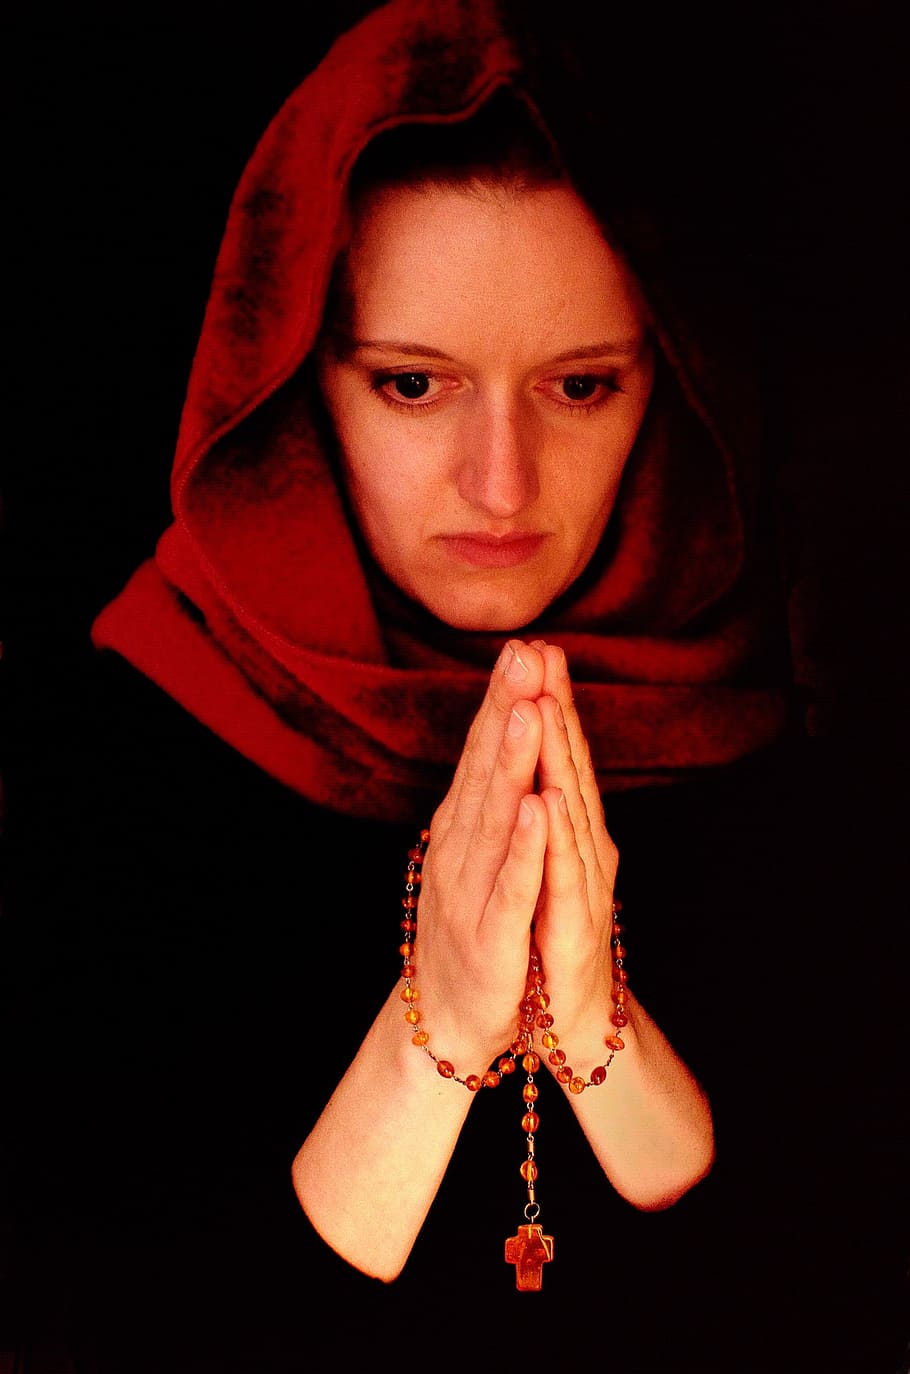 woman, praying, holding, prayer beads, people, prayer, religion, portrait, cross, wishes